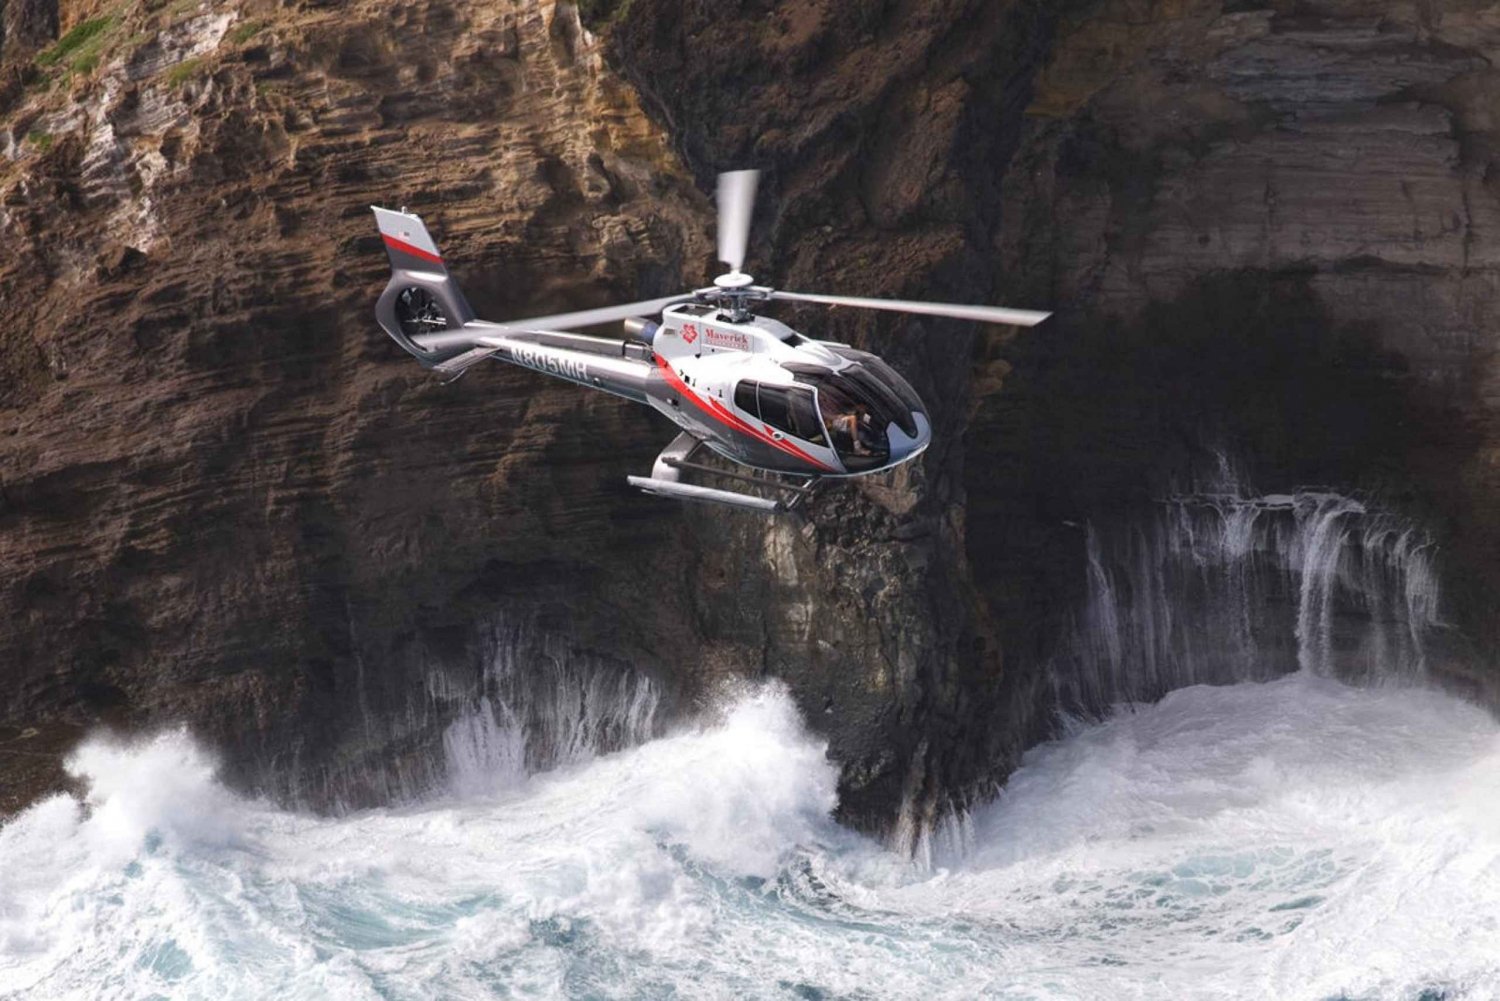 Central Maui: To-øys naturskjønn helikopterflyvning til Molokai